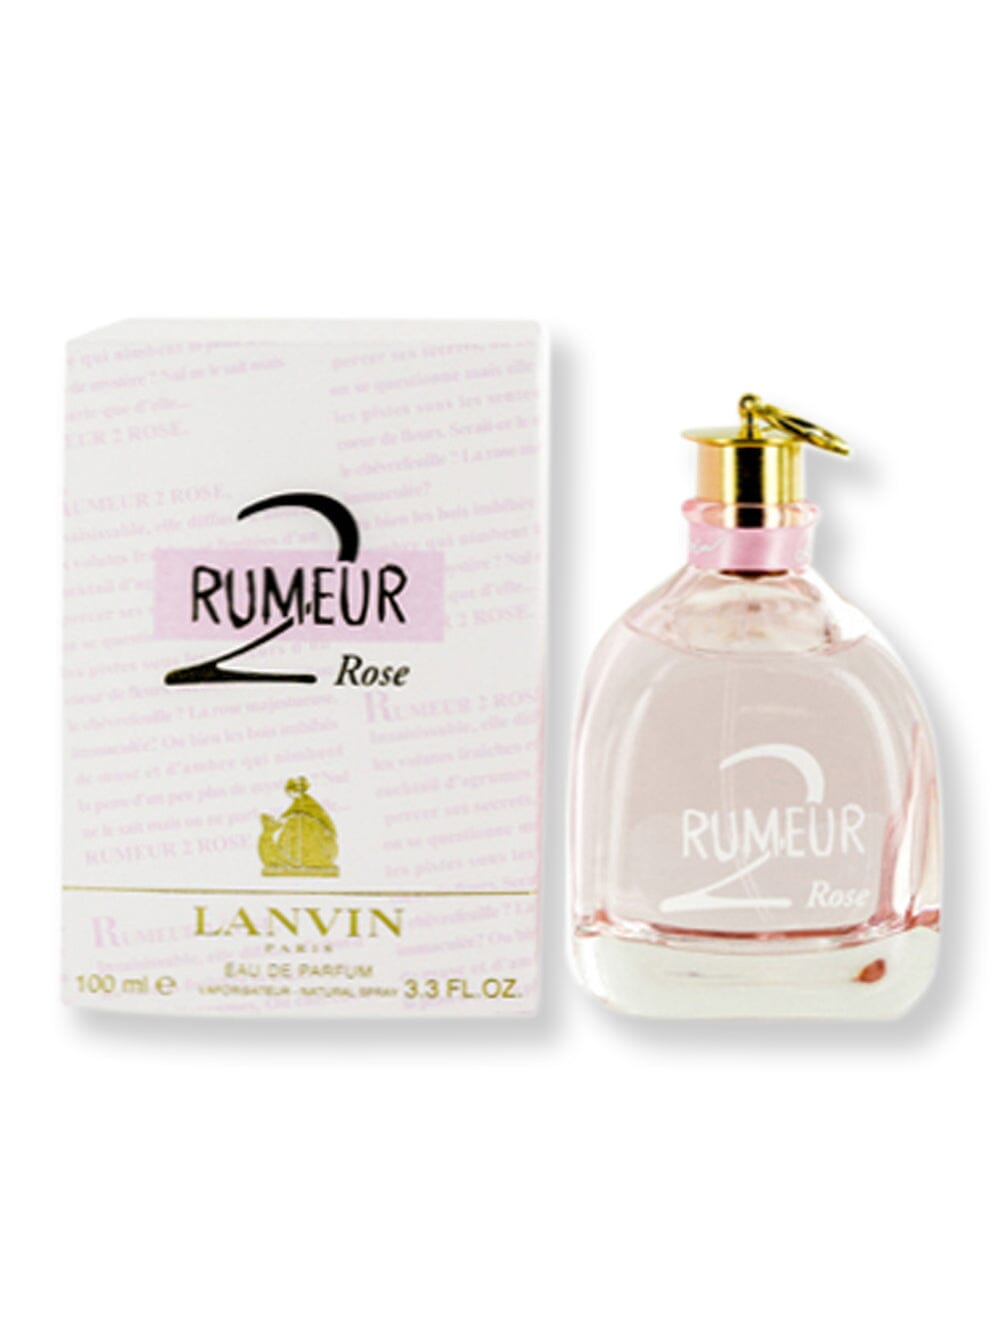 Lanvin Lanvin Rumeur 2 Rose EDP Spray 3.3 oz Perfume 